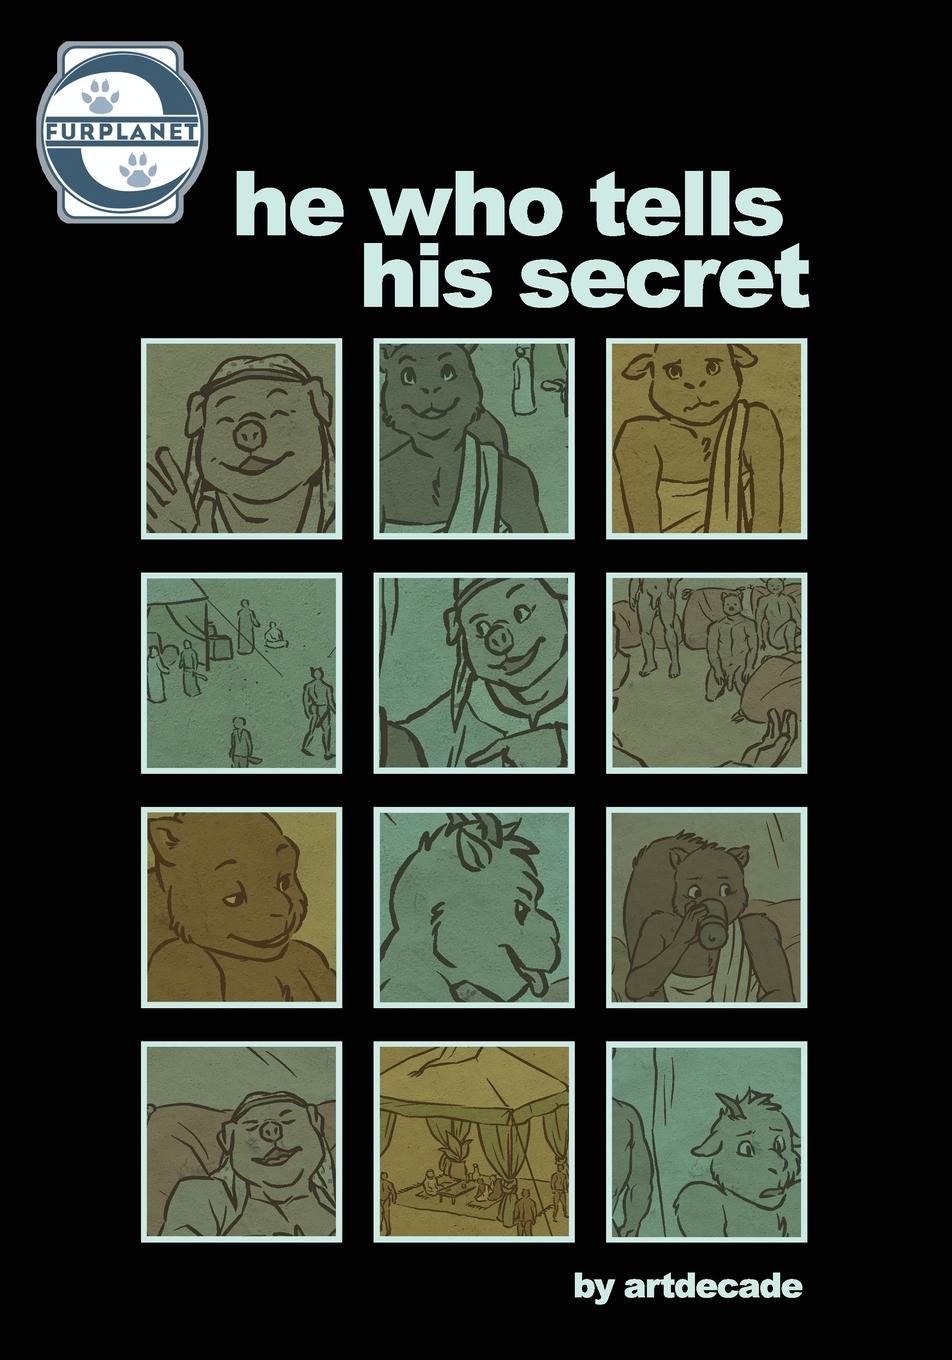 He who tells his secret